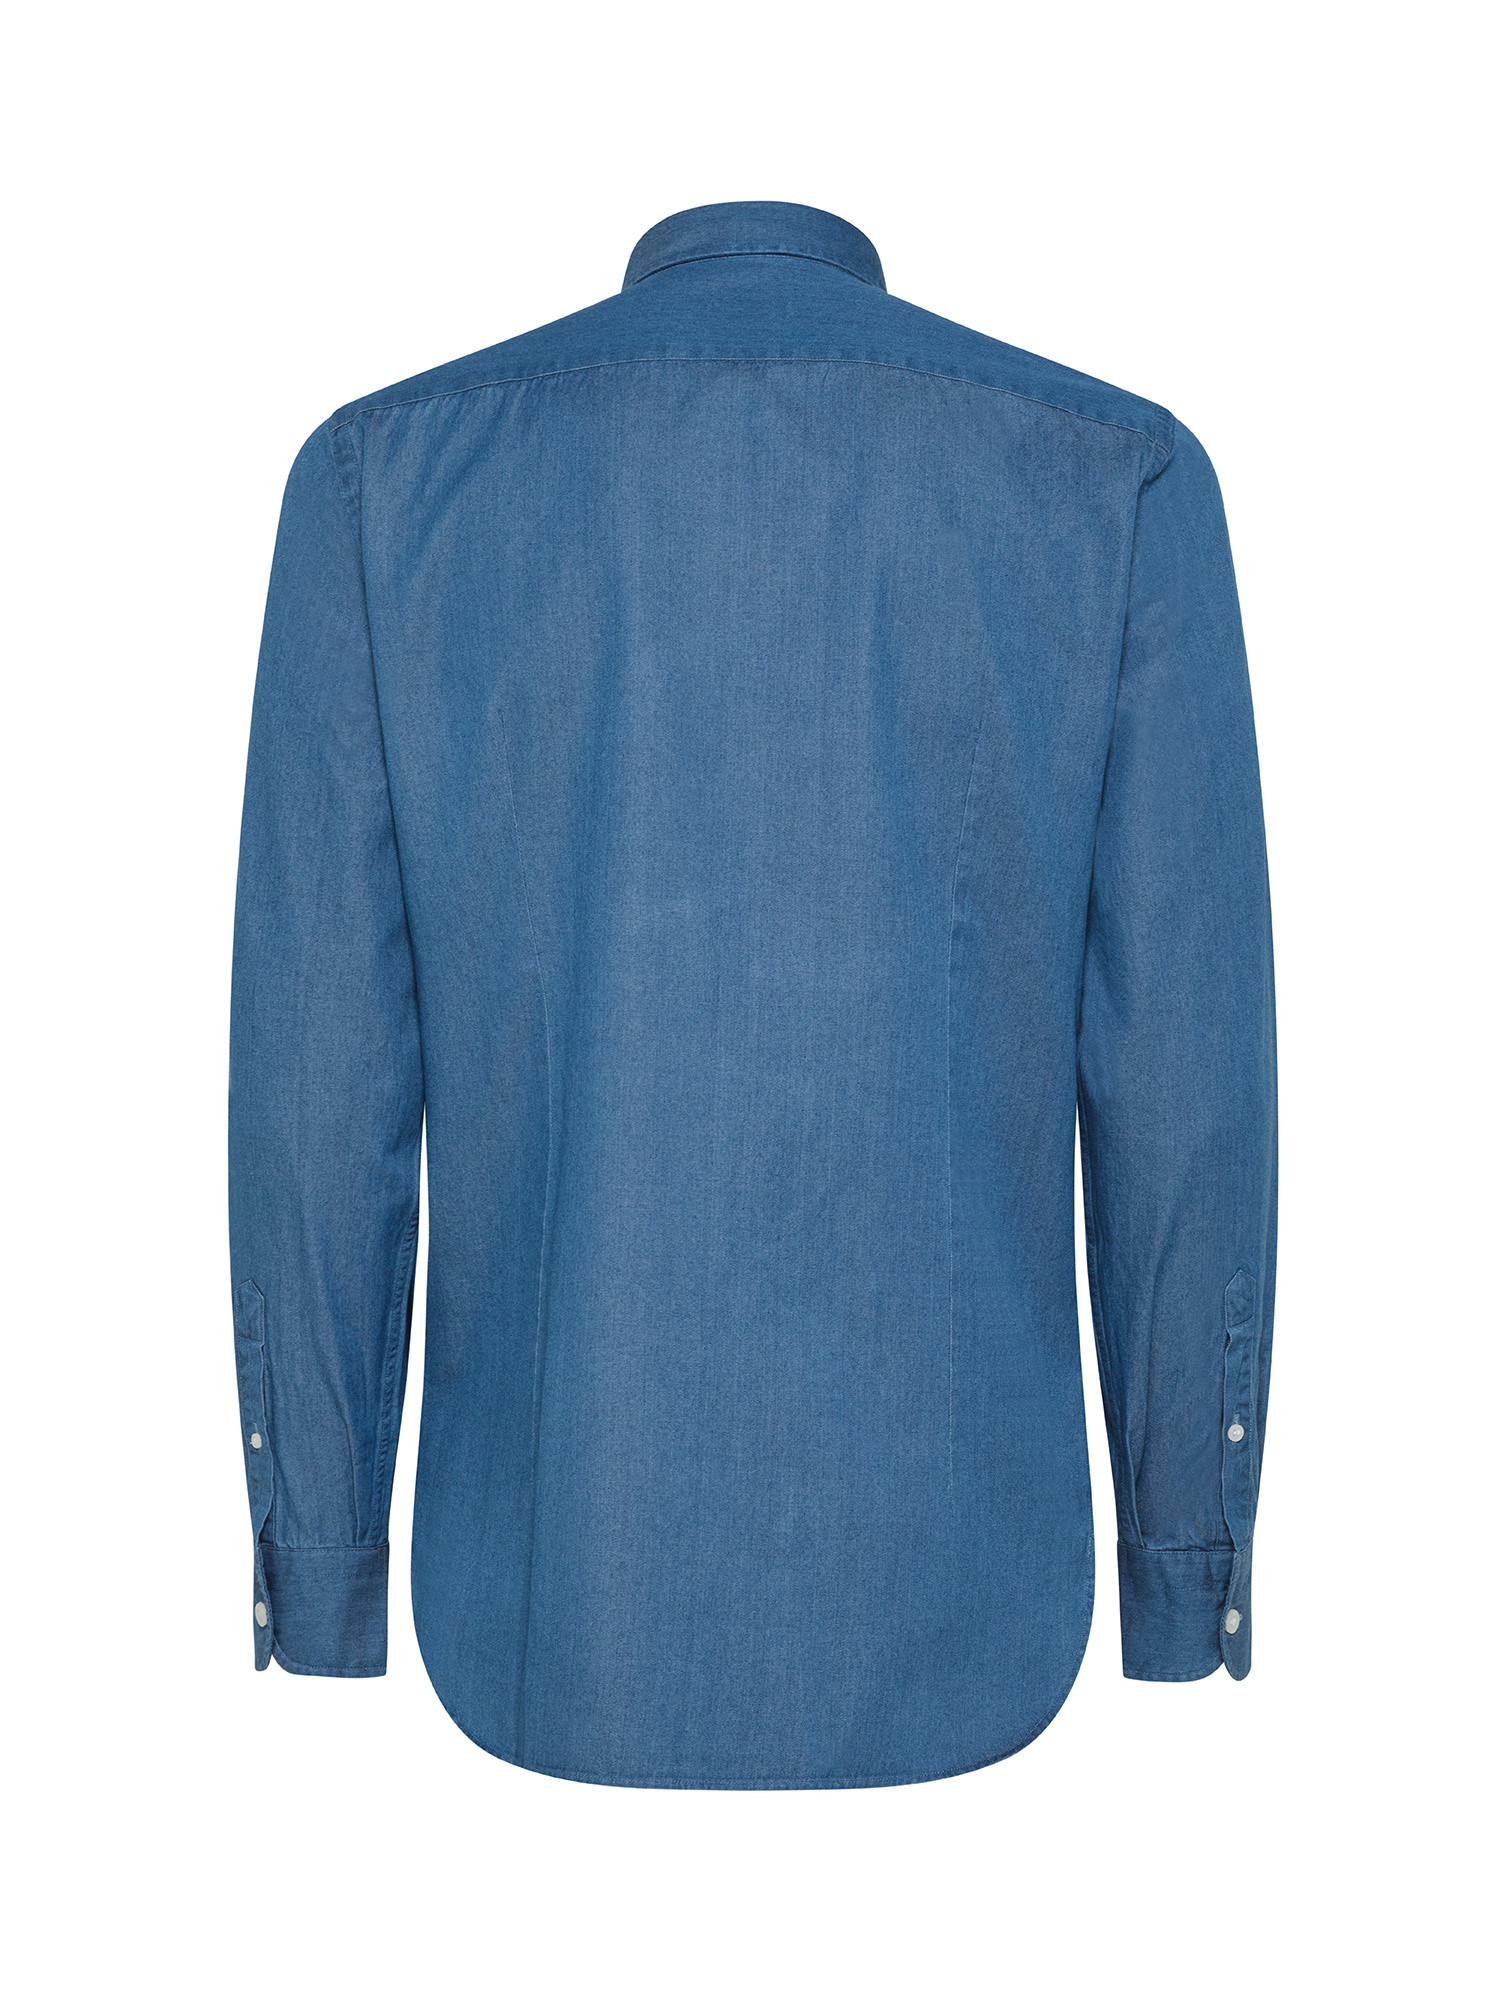 Luca D'Altieri - Camicia slim fit in puro cotone, Blu, large image number 1